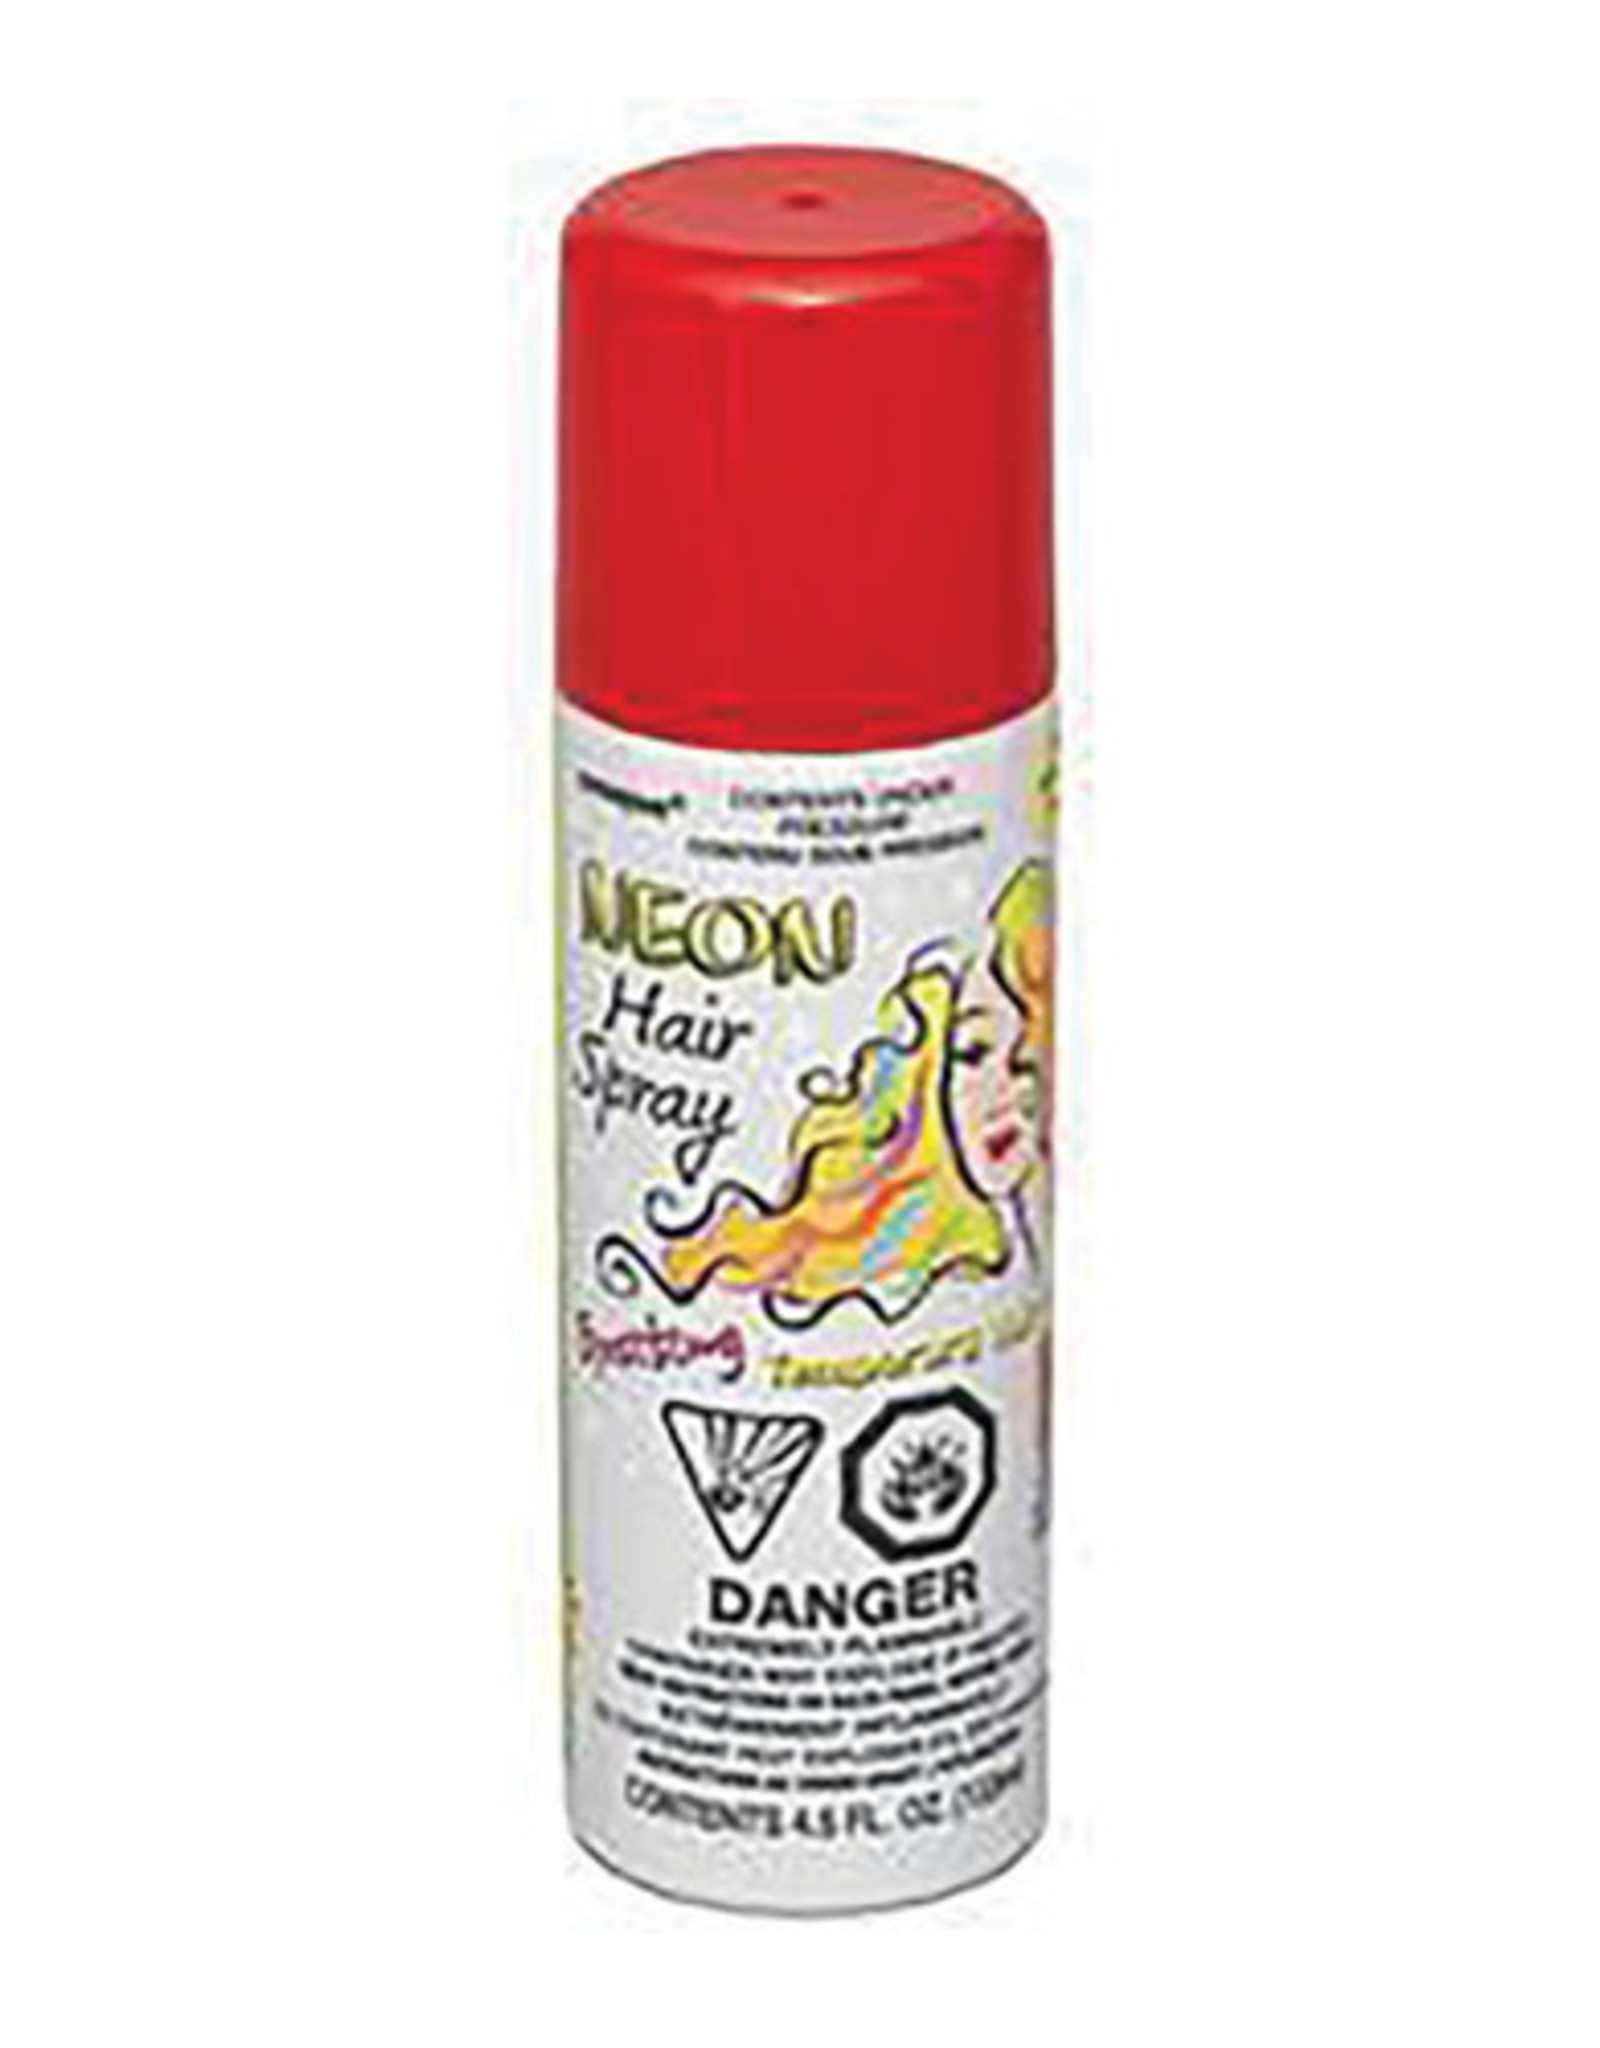 Neon Red Hair Spray